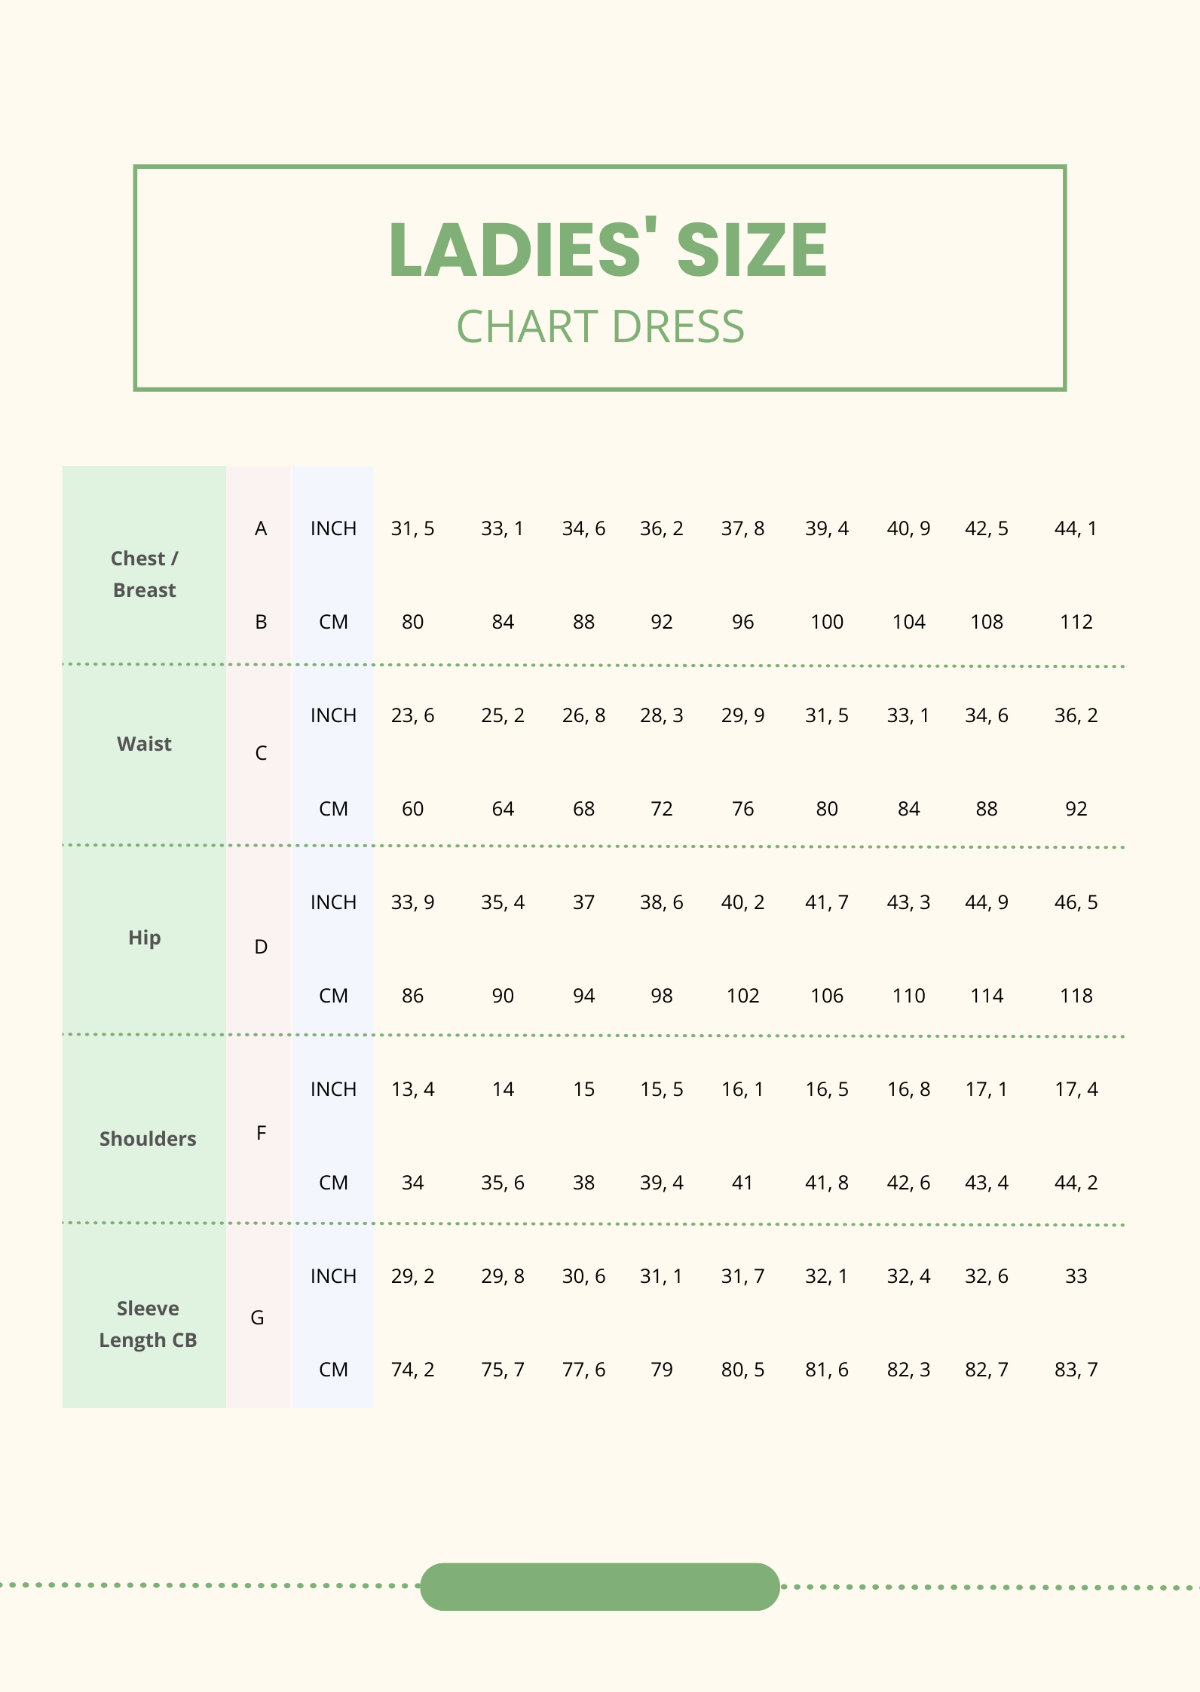 Free Ladies Size Chart Dress Template